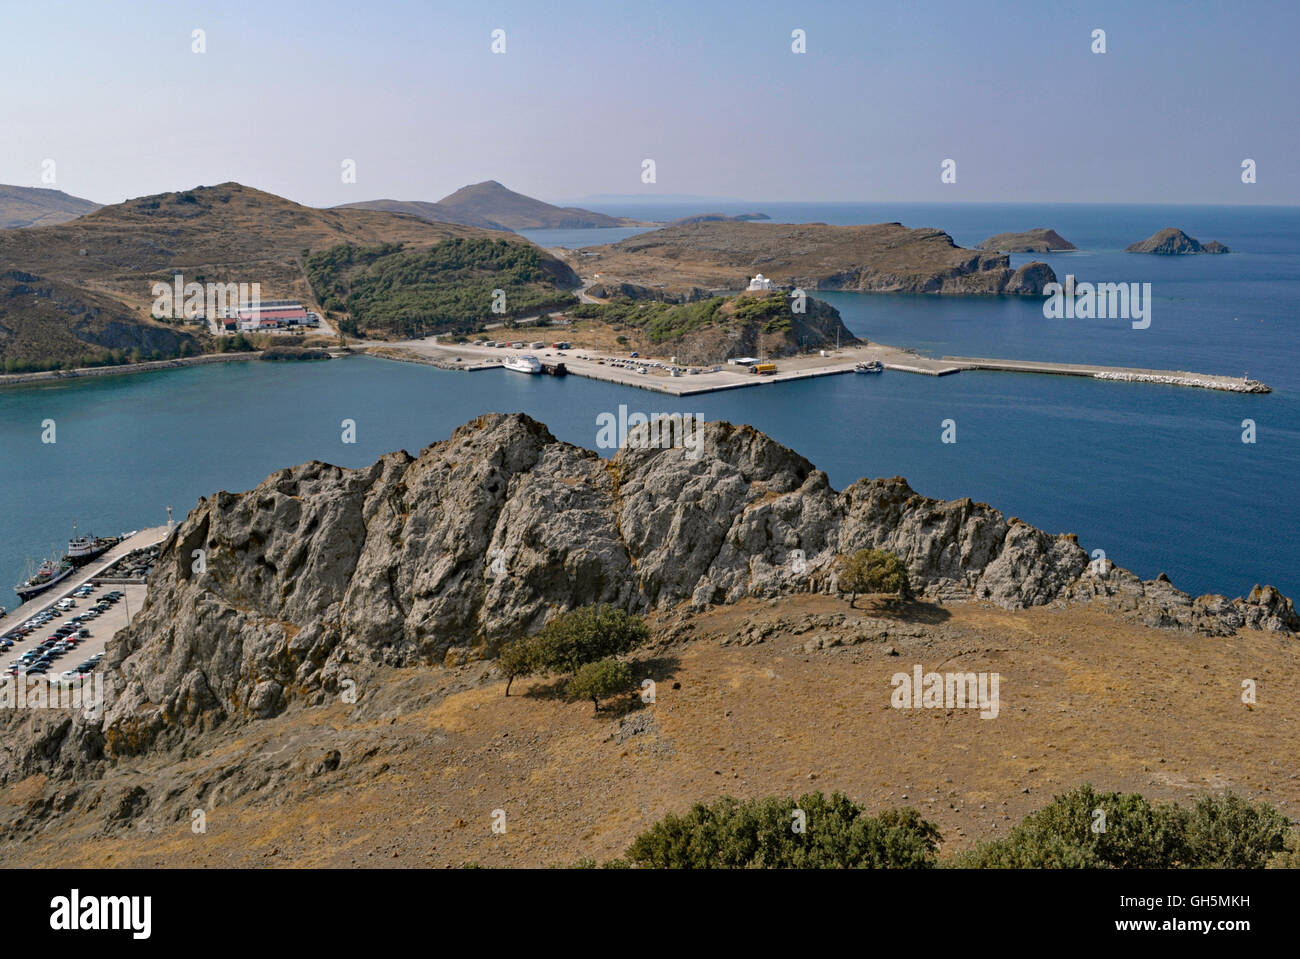 view of Tourkikos bay and Myrina main harbour, Lemnos Island, Greece Stock Photo